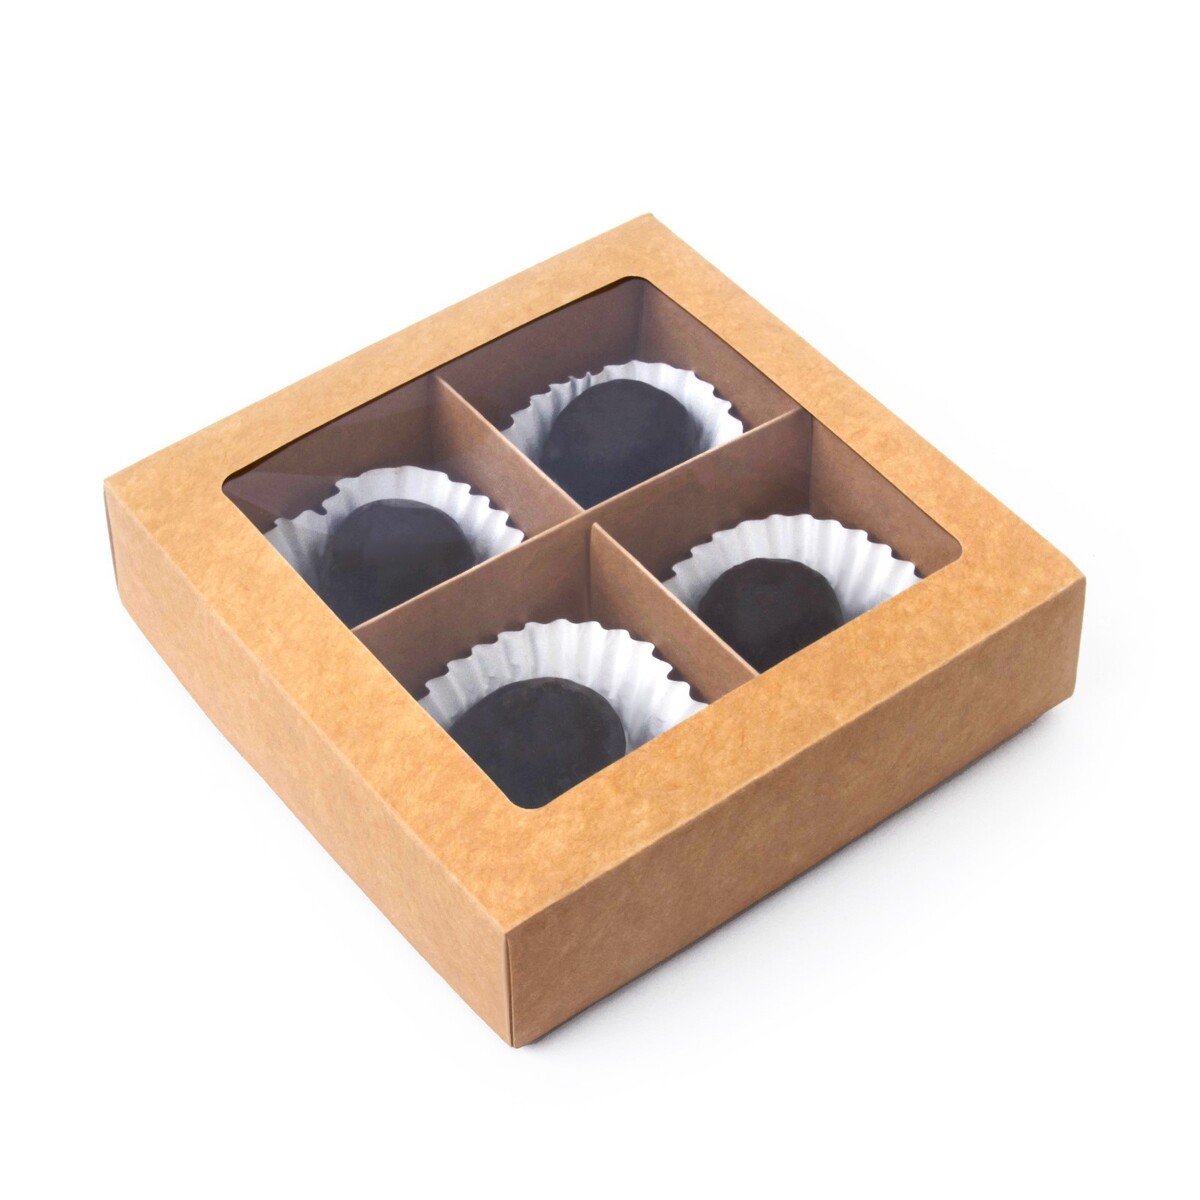 Коробка складная под 4 конфеты с окном, крафт, 12.6 х 12.6 х 3.5 см коробка складная под 12 конфет крафт 19 х 15 х 3 6 см